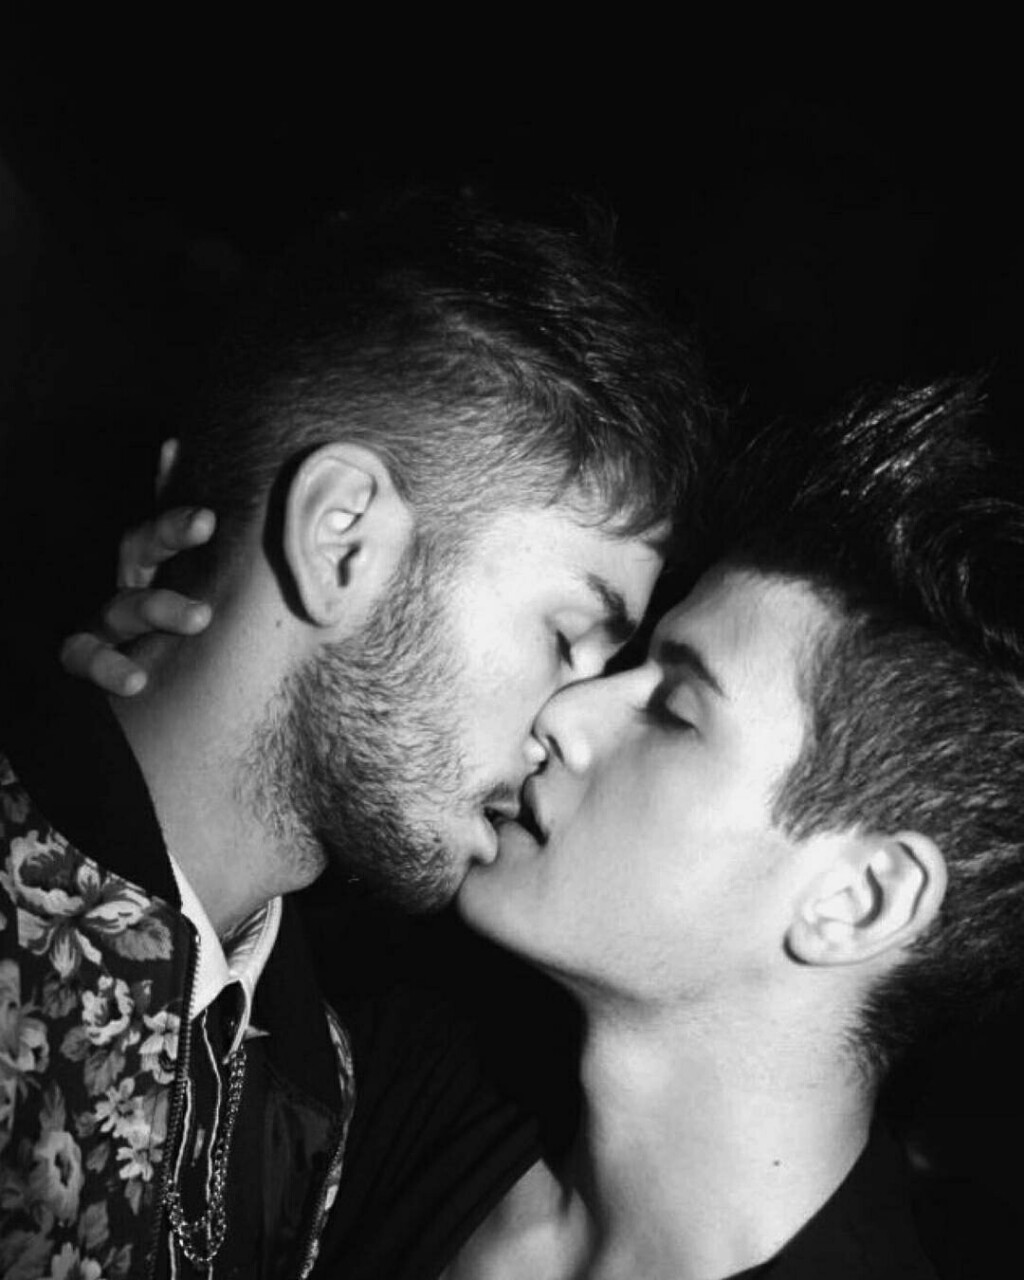 видео где геи целуются фото 23